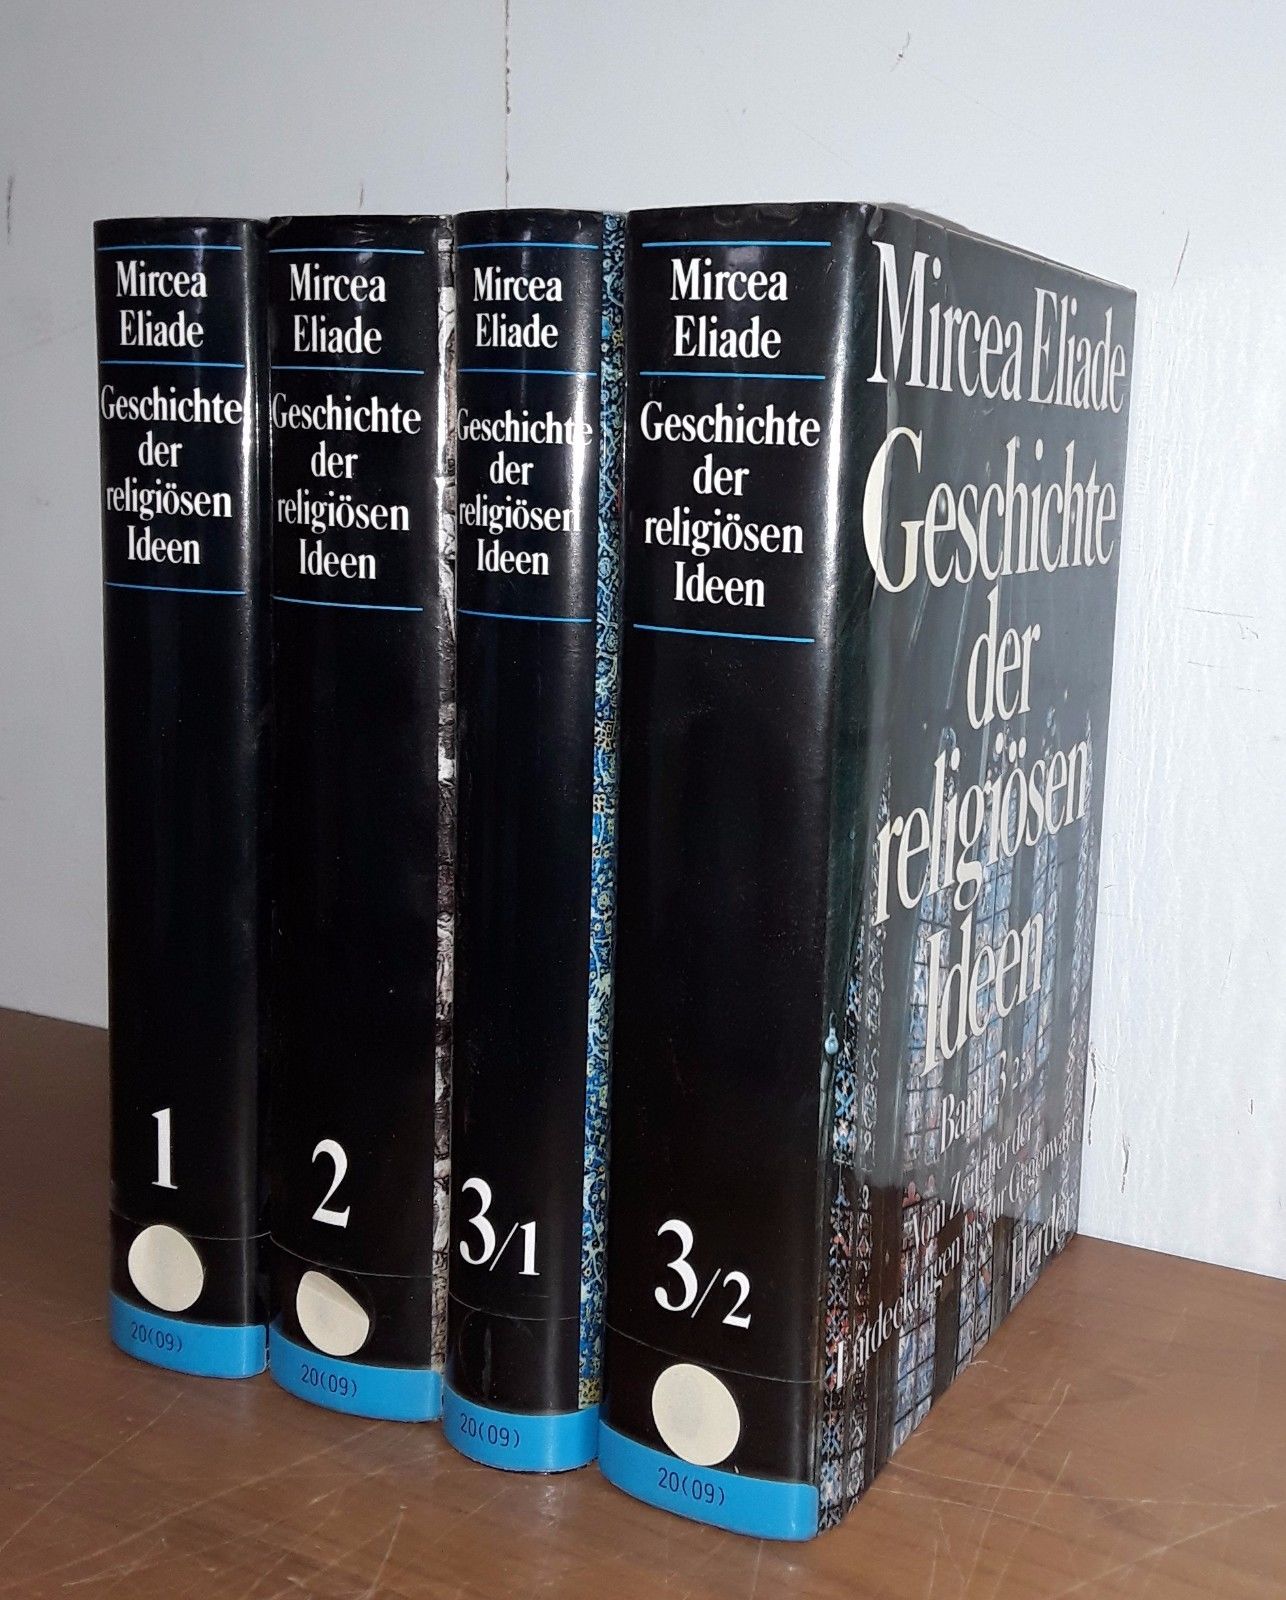 Mircea Eliade - Geschichte der religiösen Ideen Band 1 - 3.2 (4 Bände)